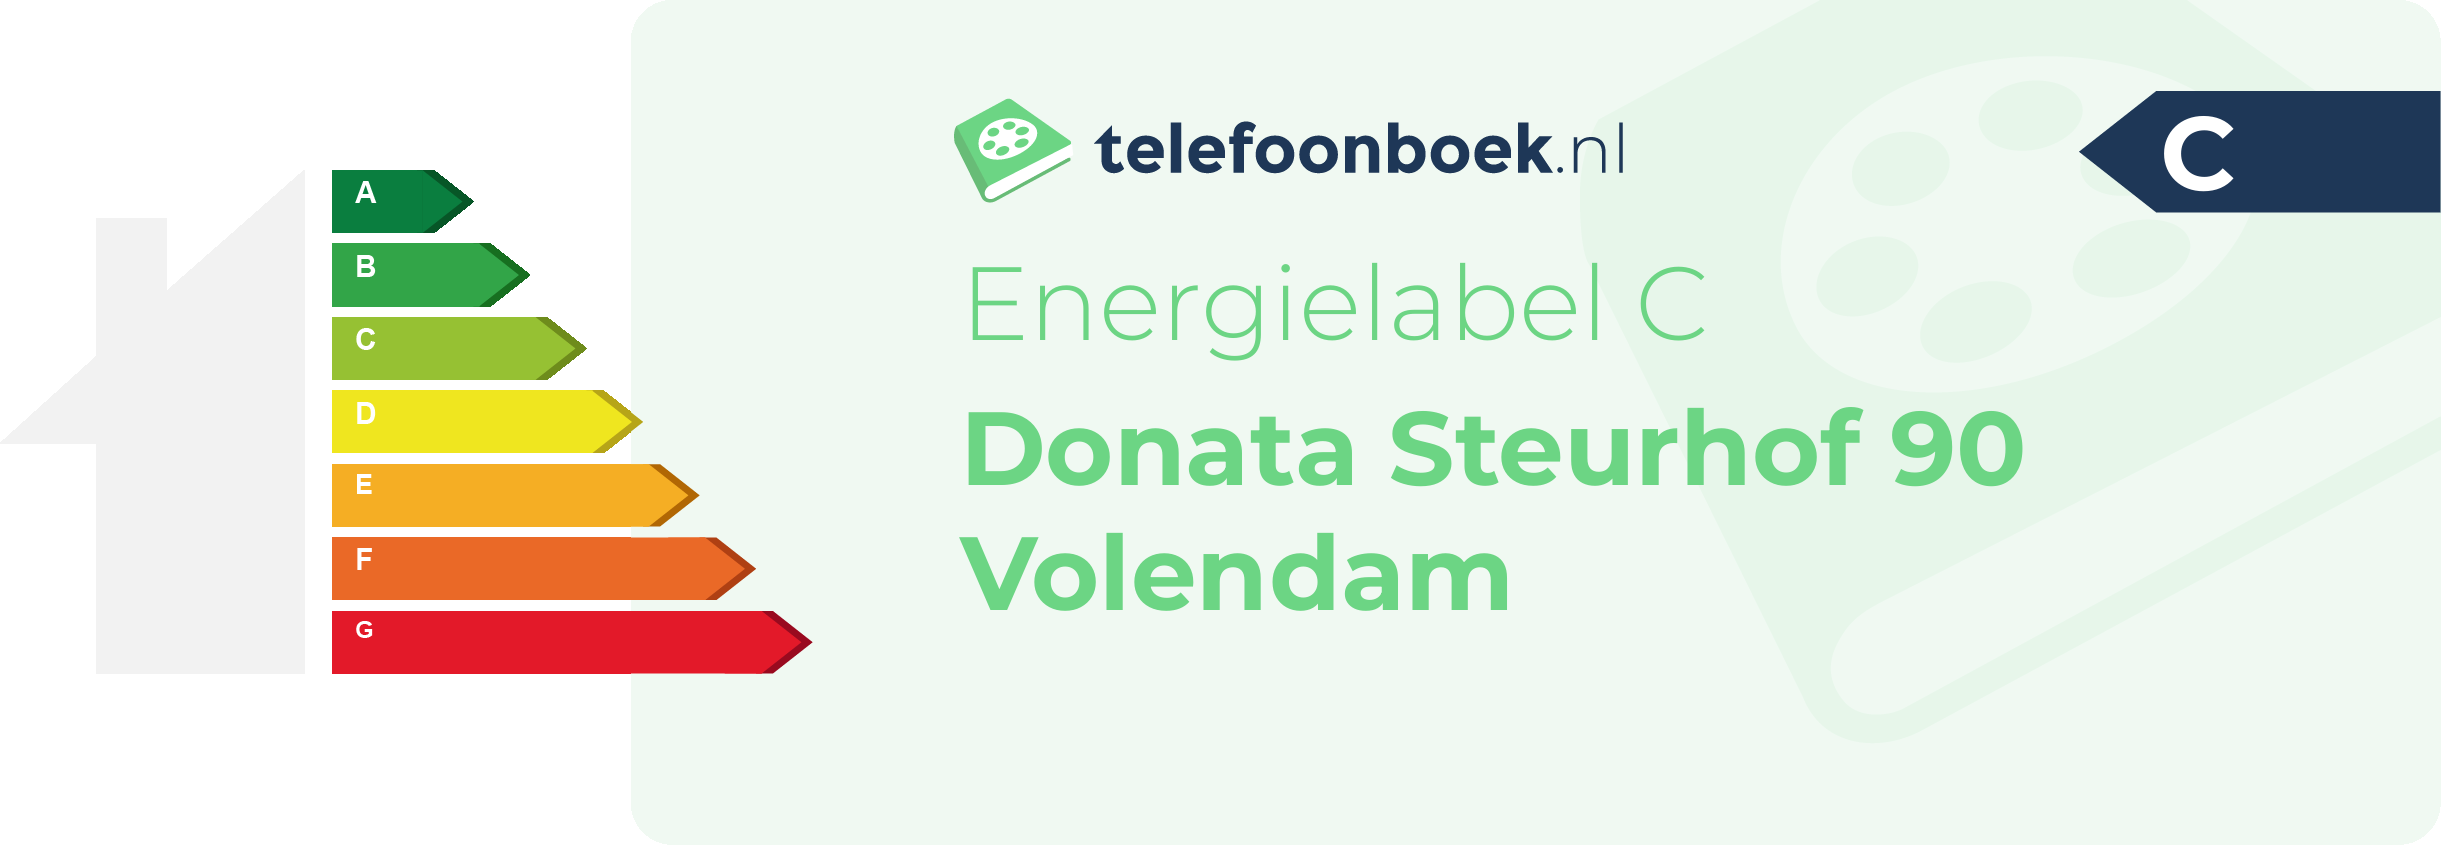 Energielabel Donata Steurhof 90 Volendam